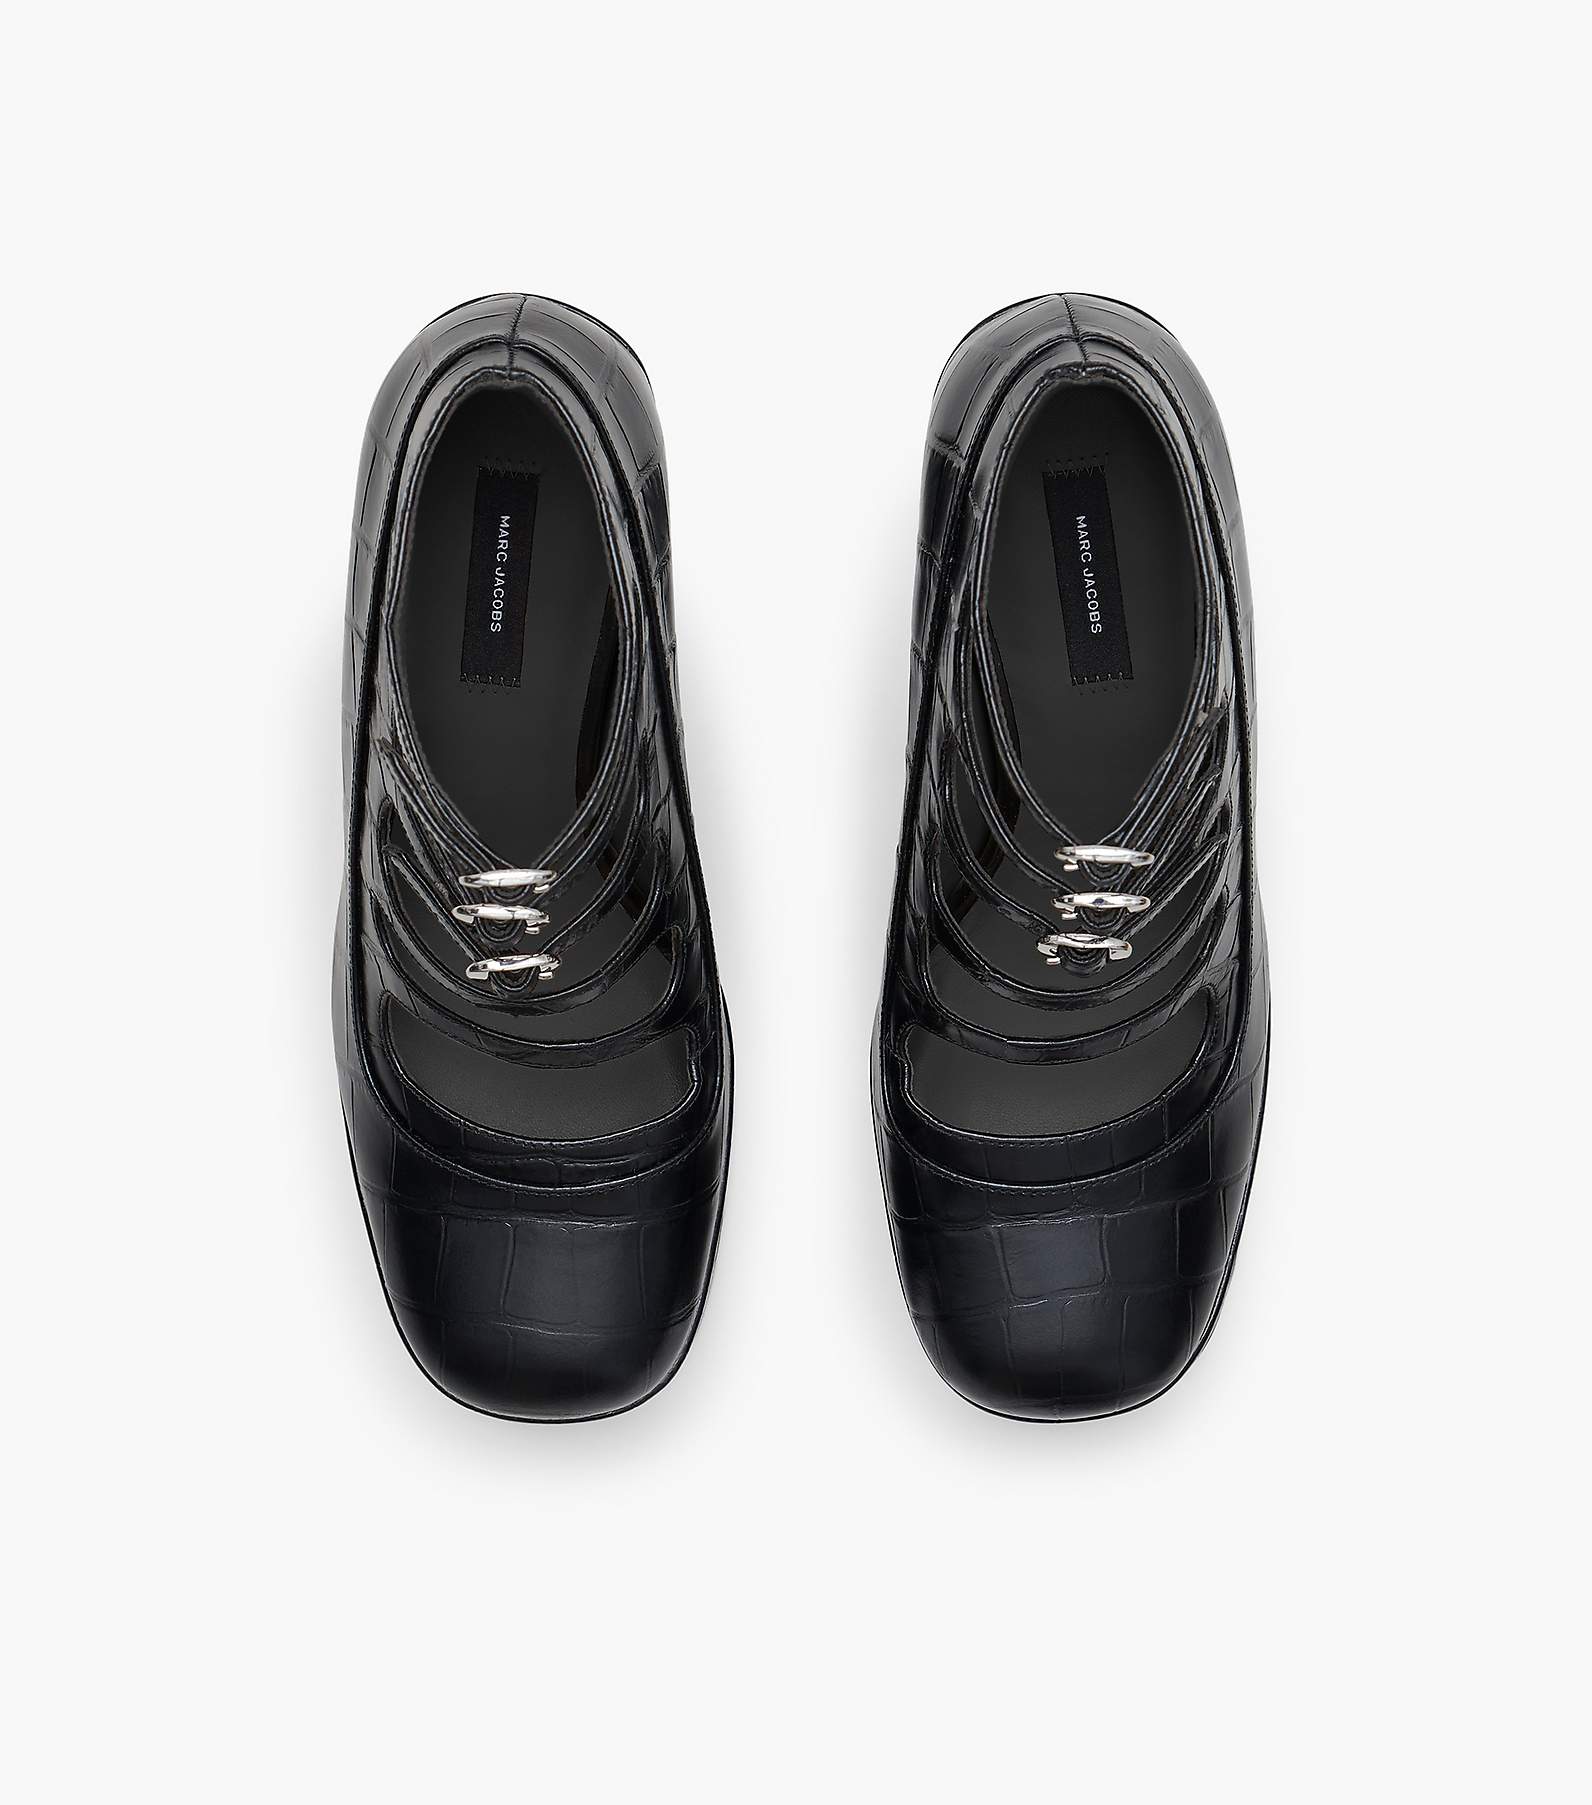 Marc Jacobs: Black Multi Buckle Kiki Boots